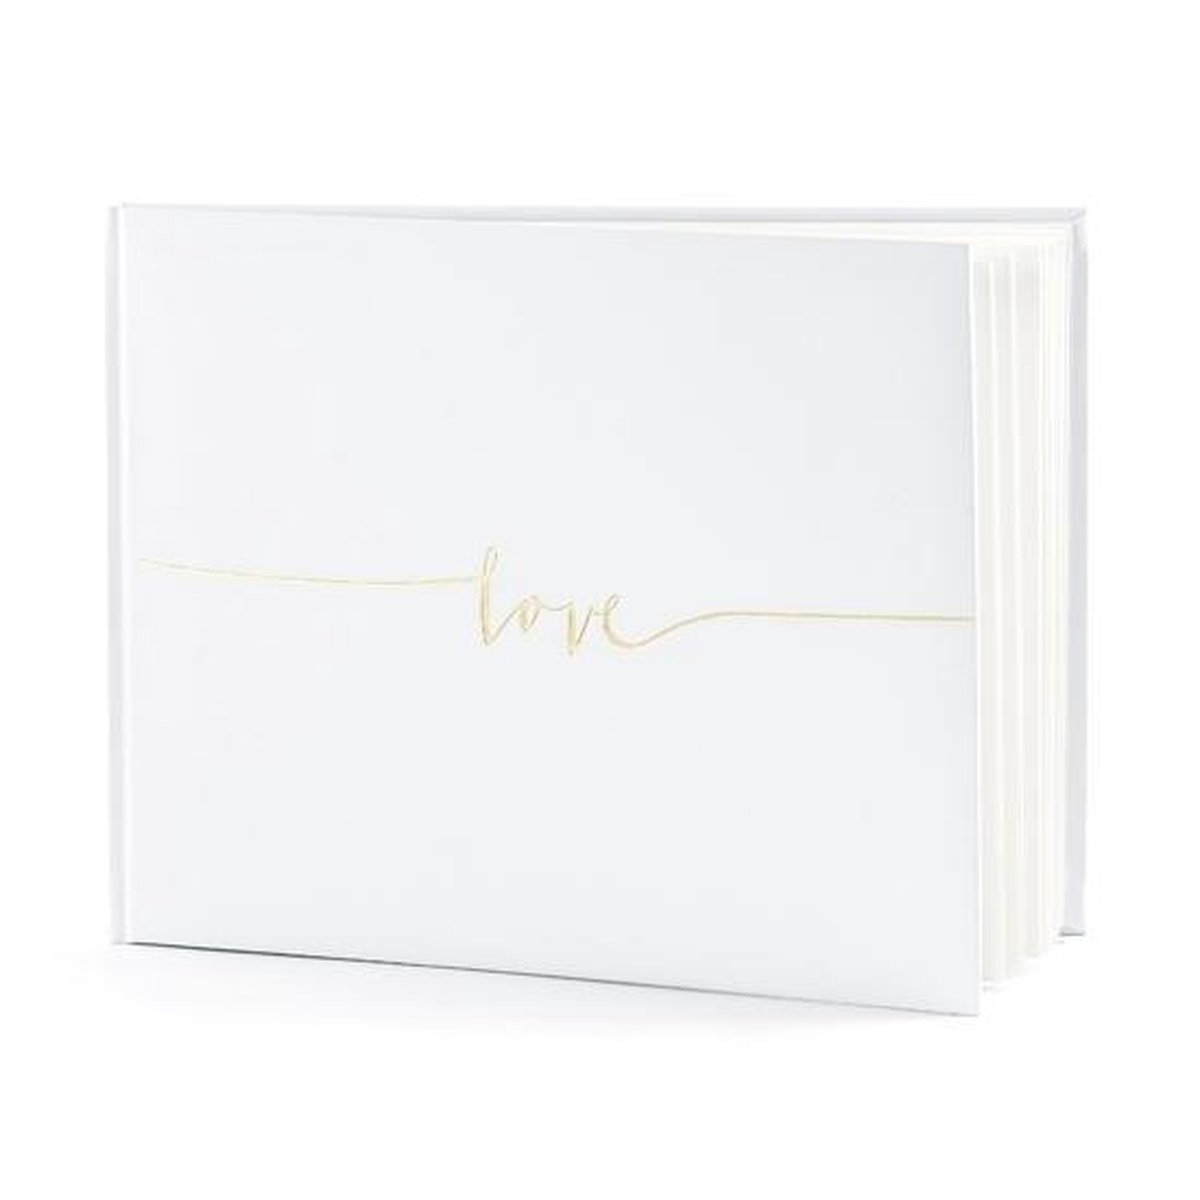 Gastenboek/receptieboek Love - Bruiloft - wit/goud - 24 x 18,5 cm - Onbekend